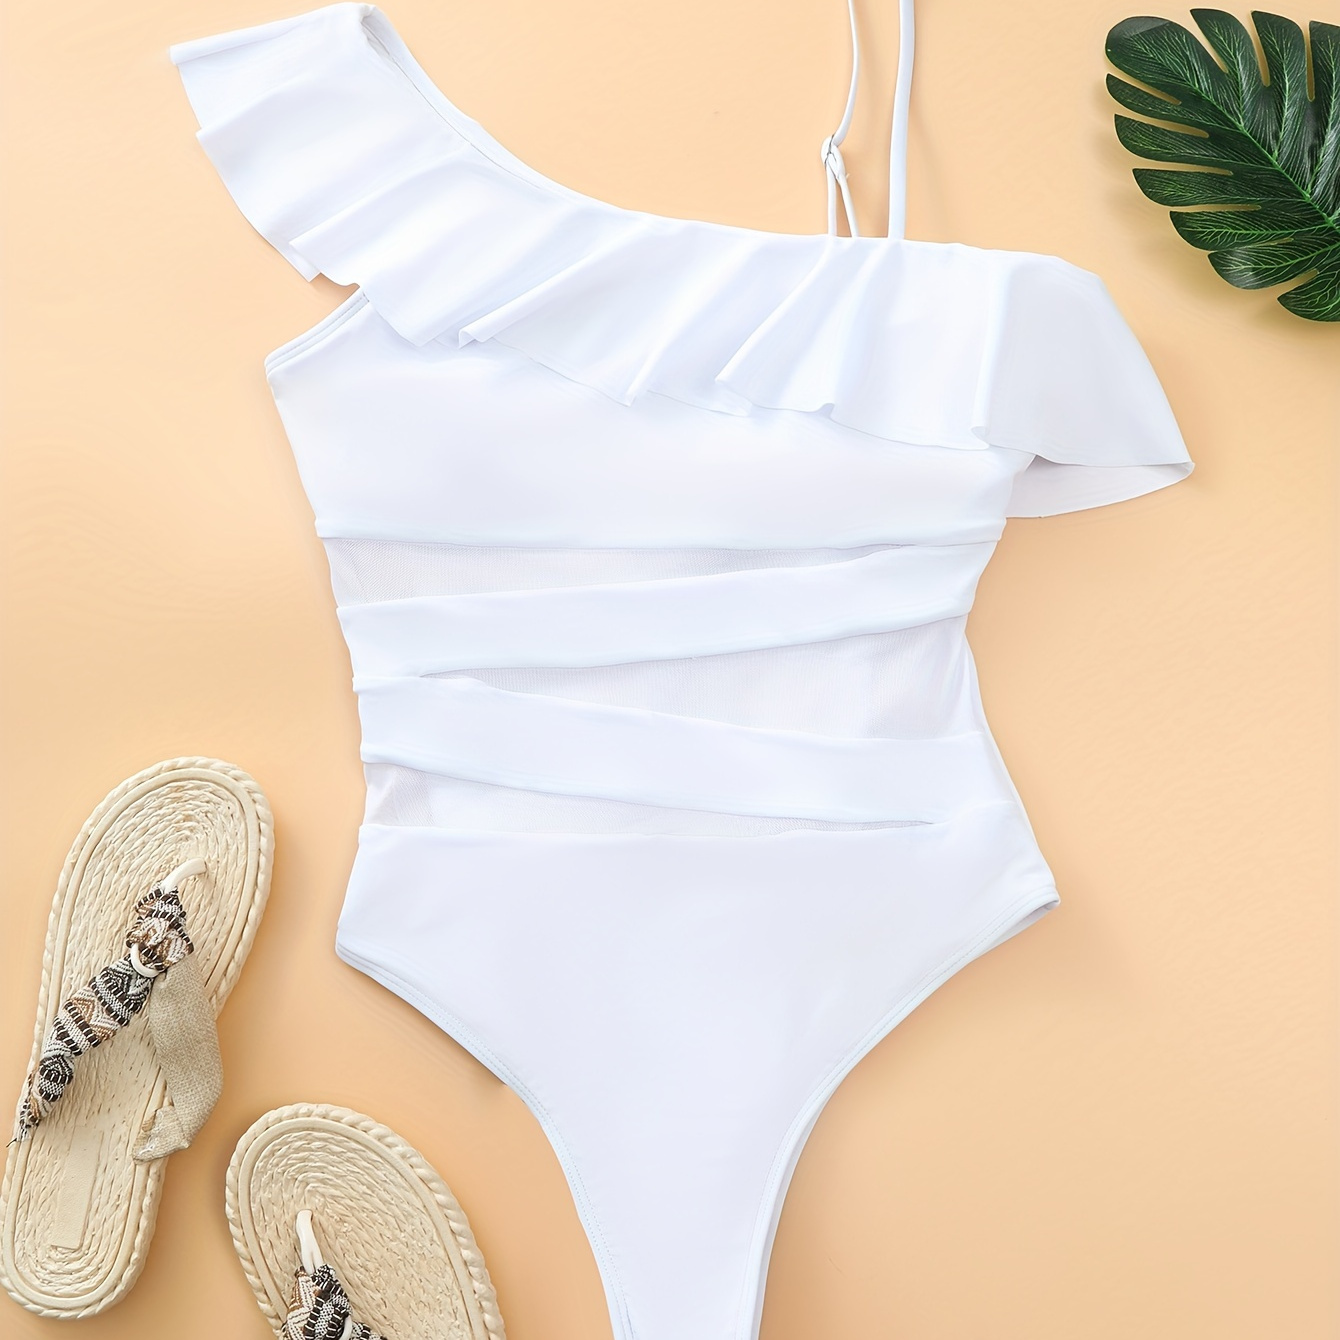 

White Contrast Mesh Bathing Suit, Asymmetrical Straps Ruffle Stretchy High Cut 1 Piece Swimsuit, Women's Swimwear & Clothing